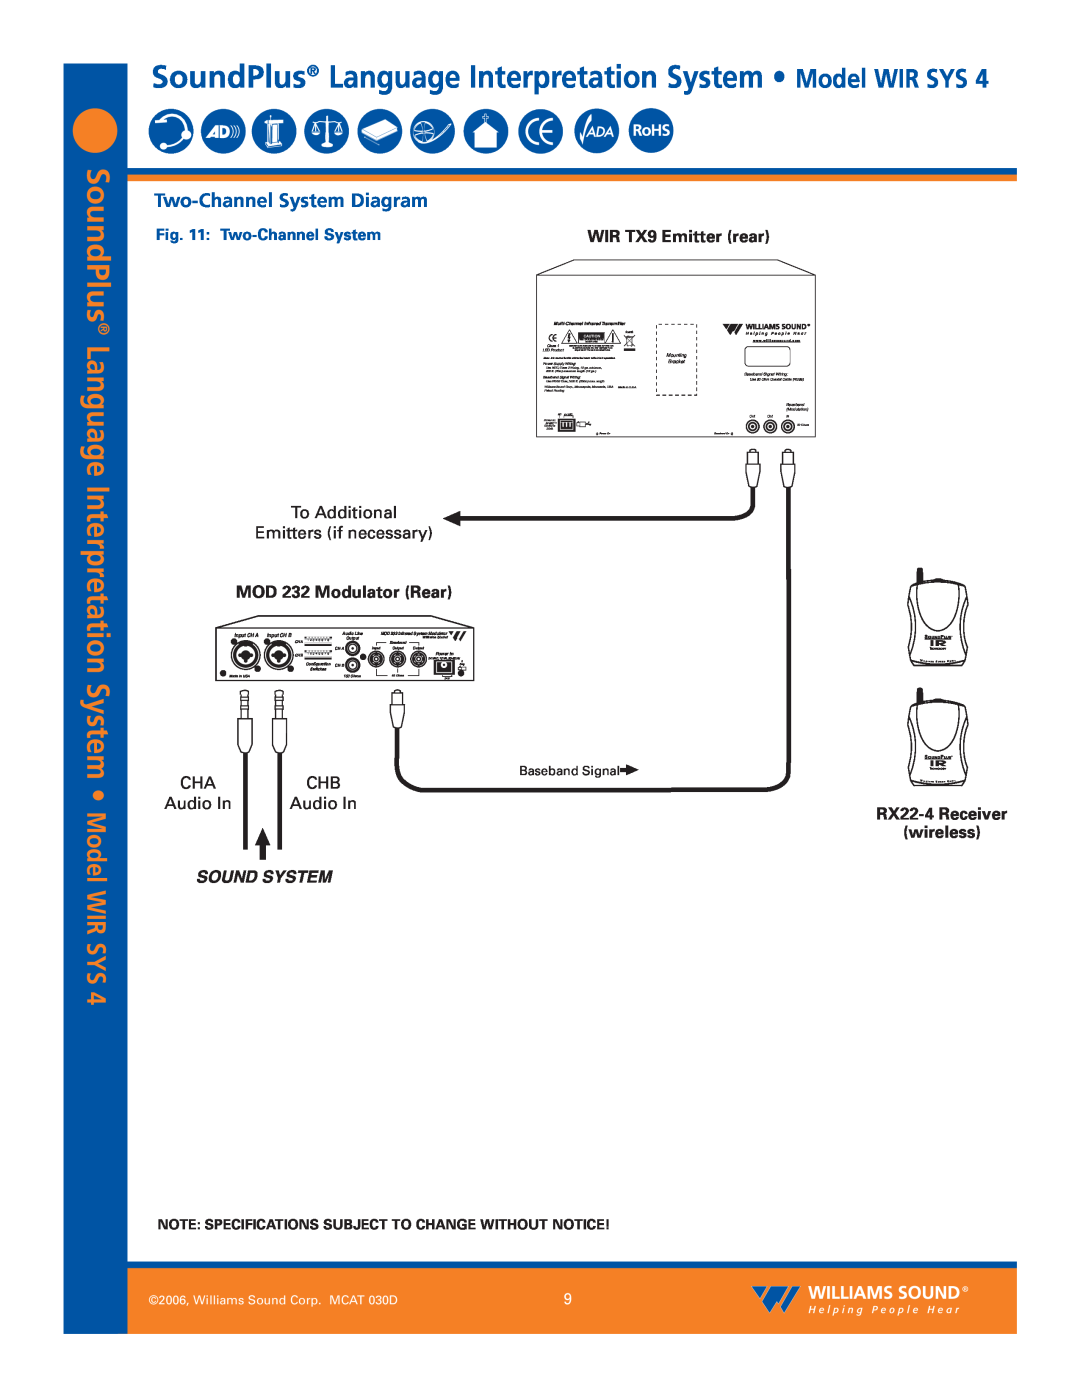 Williams Sound WIR SYS 4 Two-ChannelSystem Diagram, MOD 232 Modulator Rear, wireless, WIR TX9 Emitter rear, Sound System 